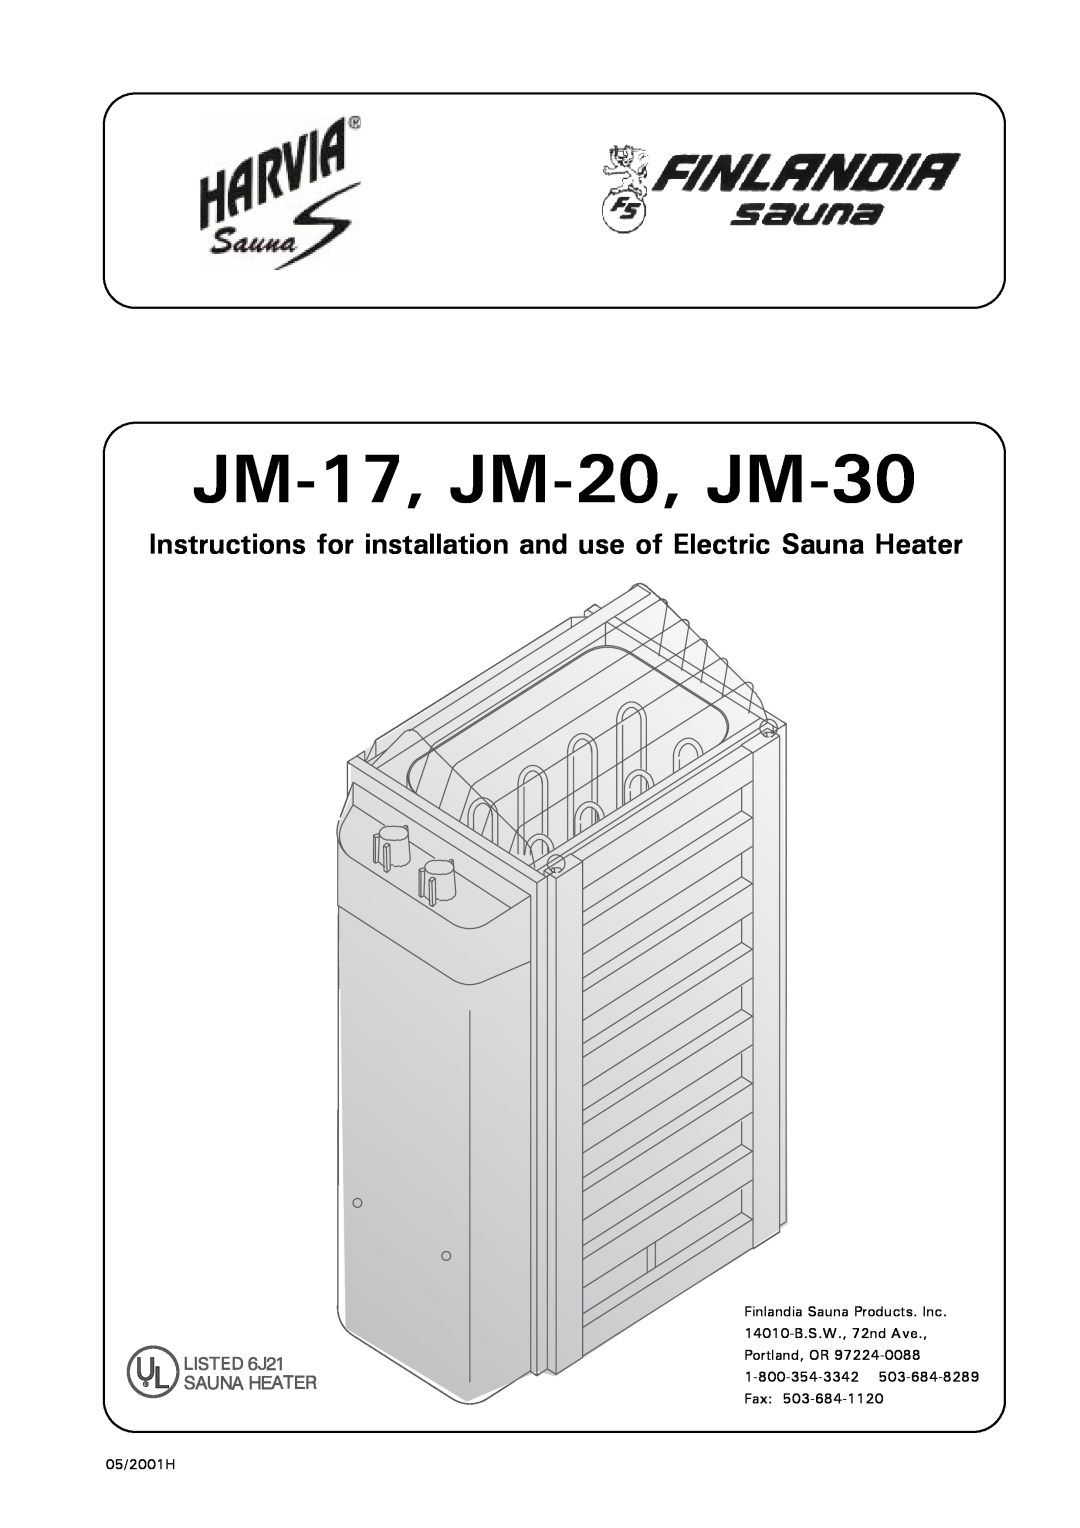 Finlandia manual JM-17, JM-20, JM-30, Finlandia Sauna Products. Inc, 14010-B.S.W.,72nd Ave Portland, OR, 05/2001H 